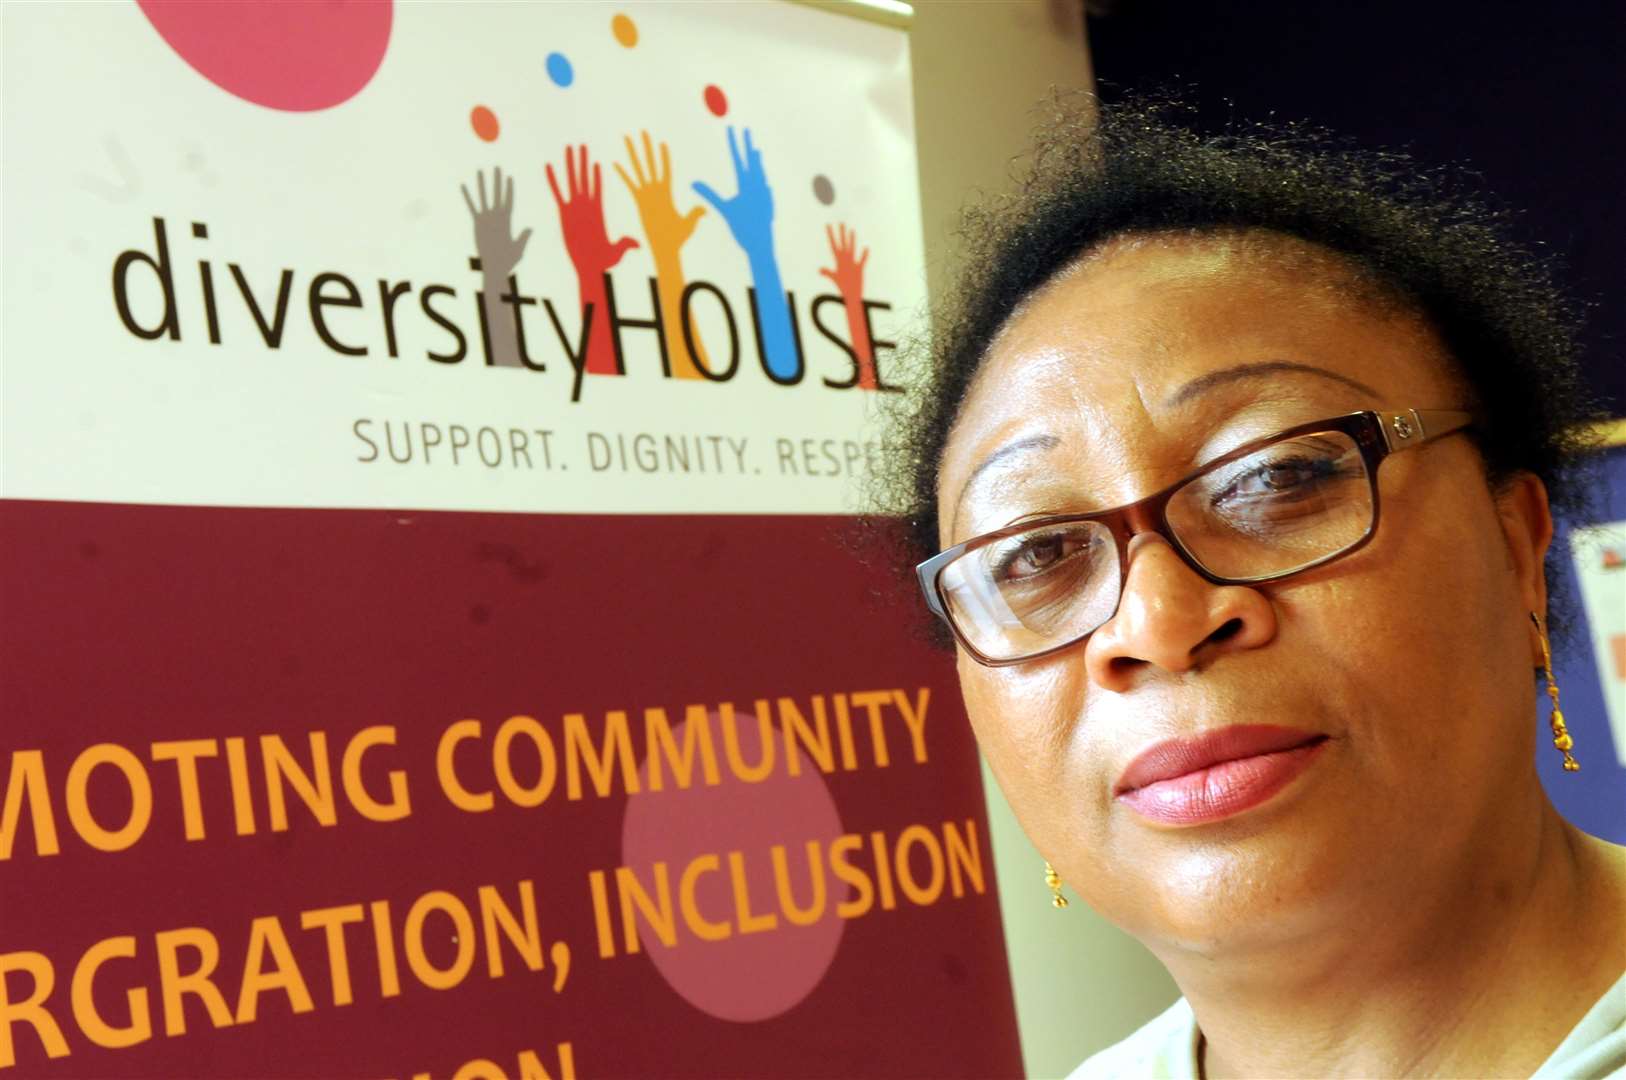 Christine Locke of Diversity House